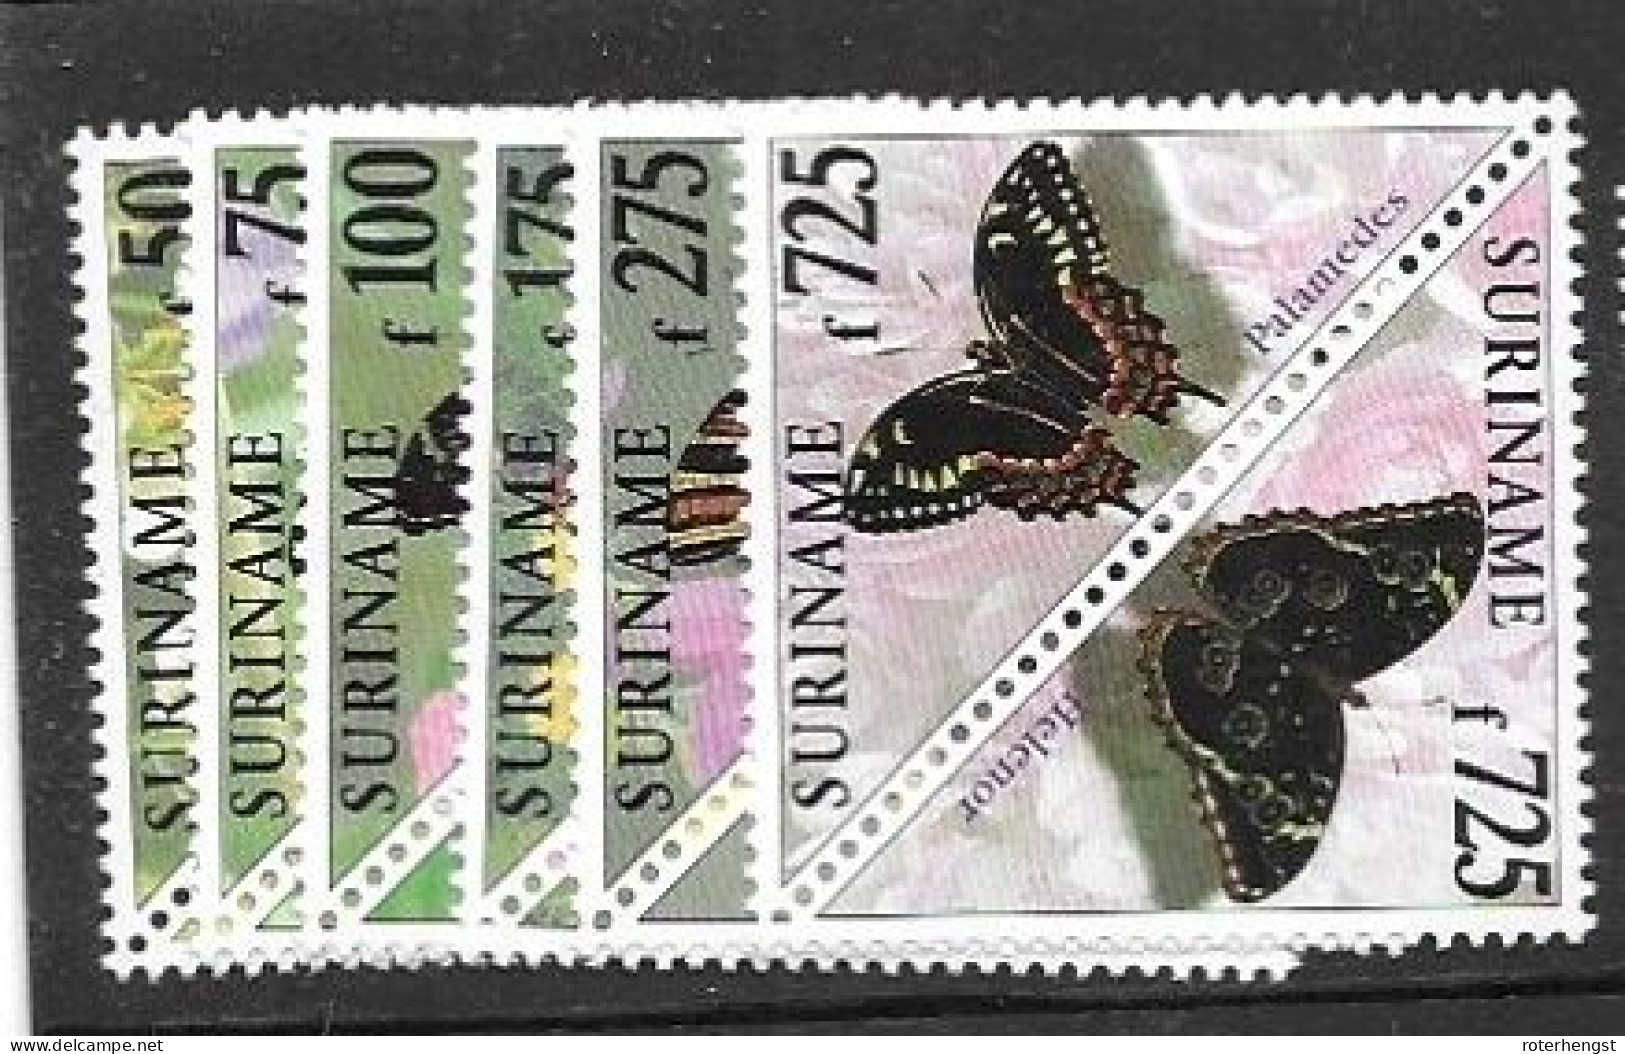 Surinam Mnh ** 1998 Butterfly Set 25 Euros - Surinam